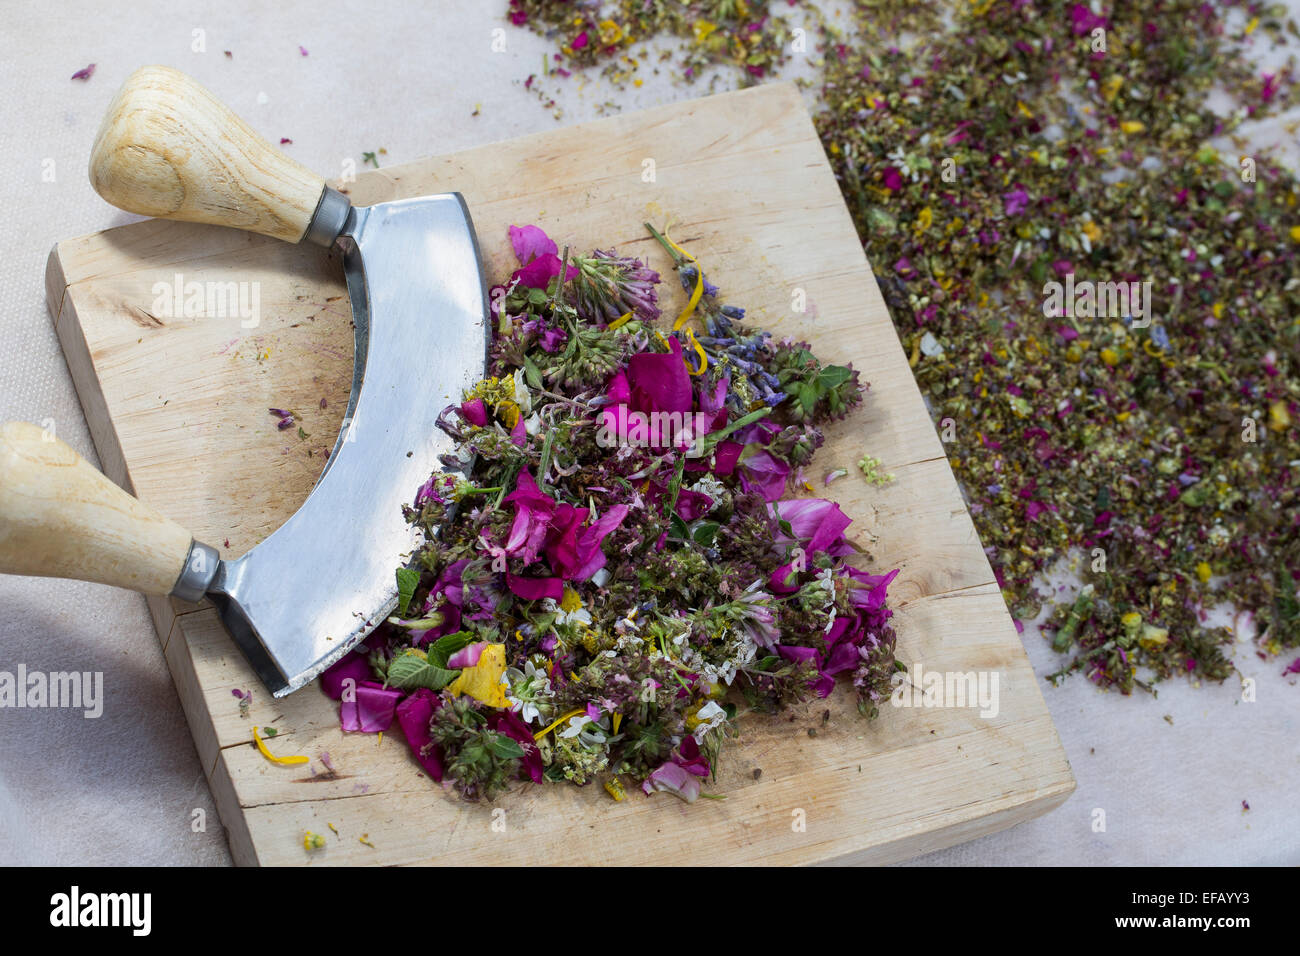 Blossoms, flowers, blooms, petals, mincing knife cradle, rocking tool, essbare Blüten, Blumen, Ernte, Wiegemesser, Messer Stock Photo